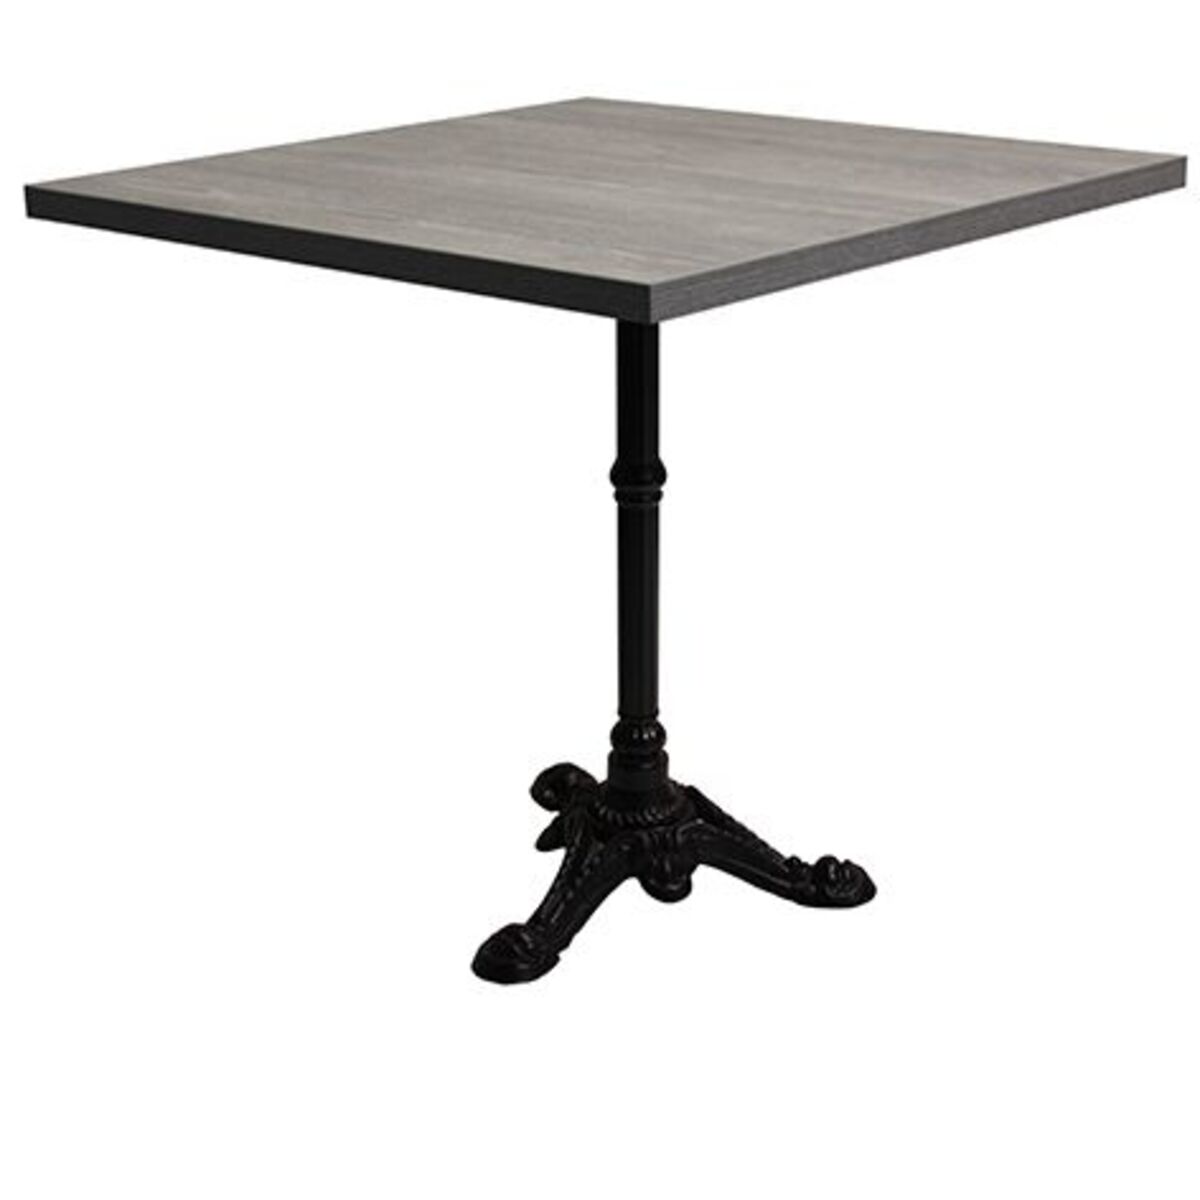 Table int. Pied fonte 3 branches bistrot & plateau tavola gris 60x60 cm